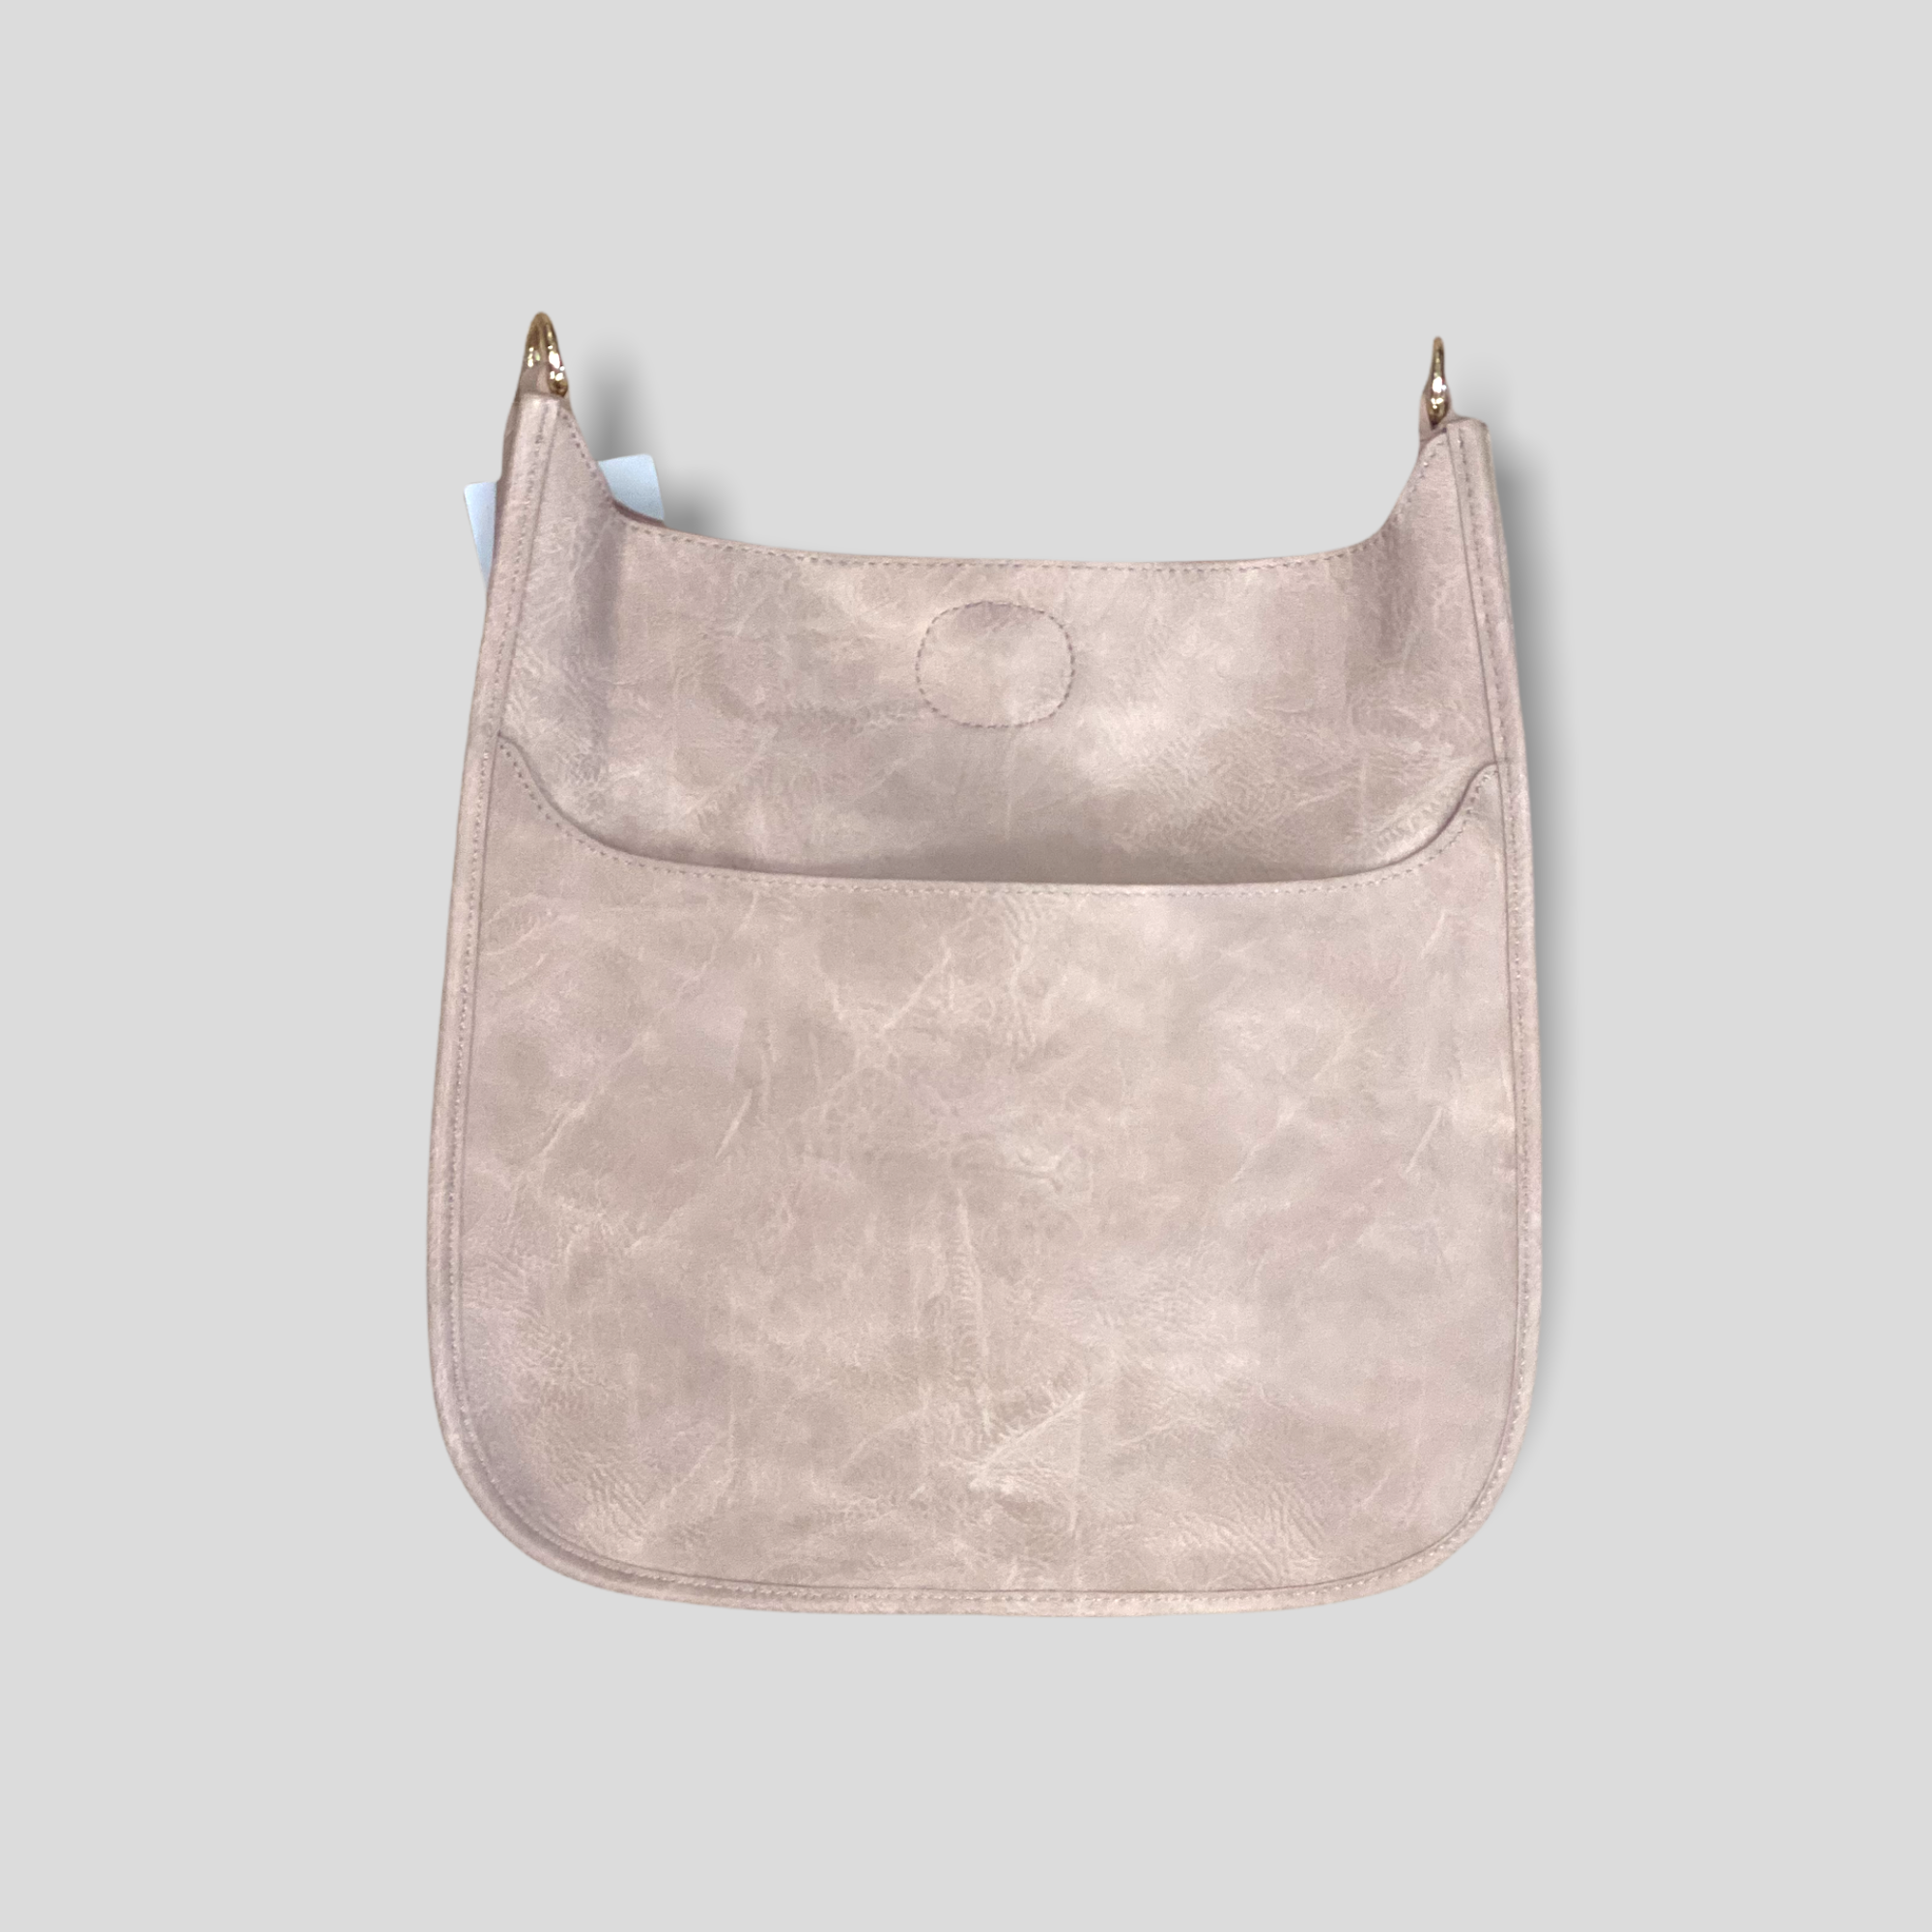 ah-dorned NYC Neoprene Handbags | The Flaunt